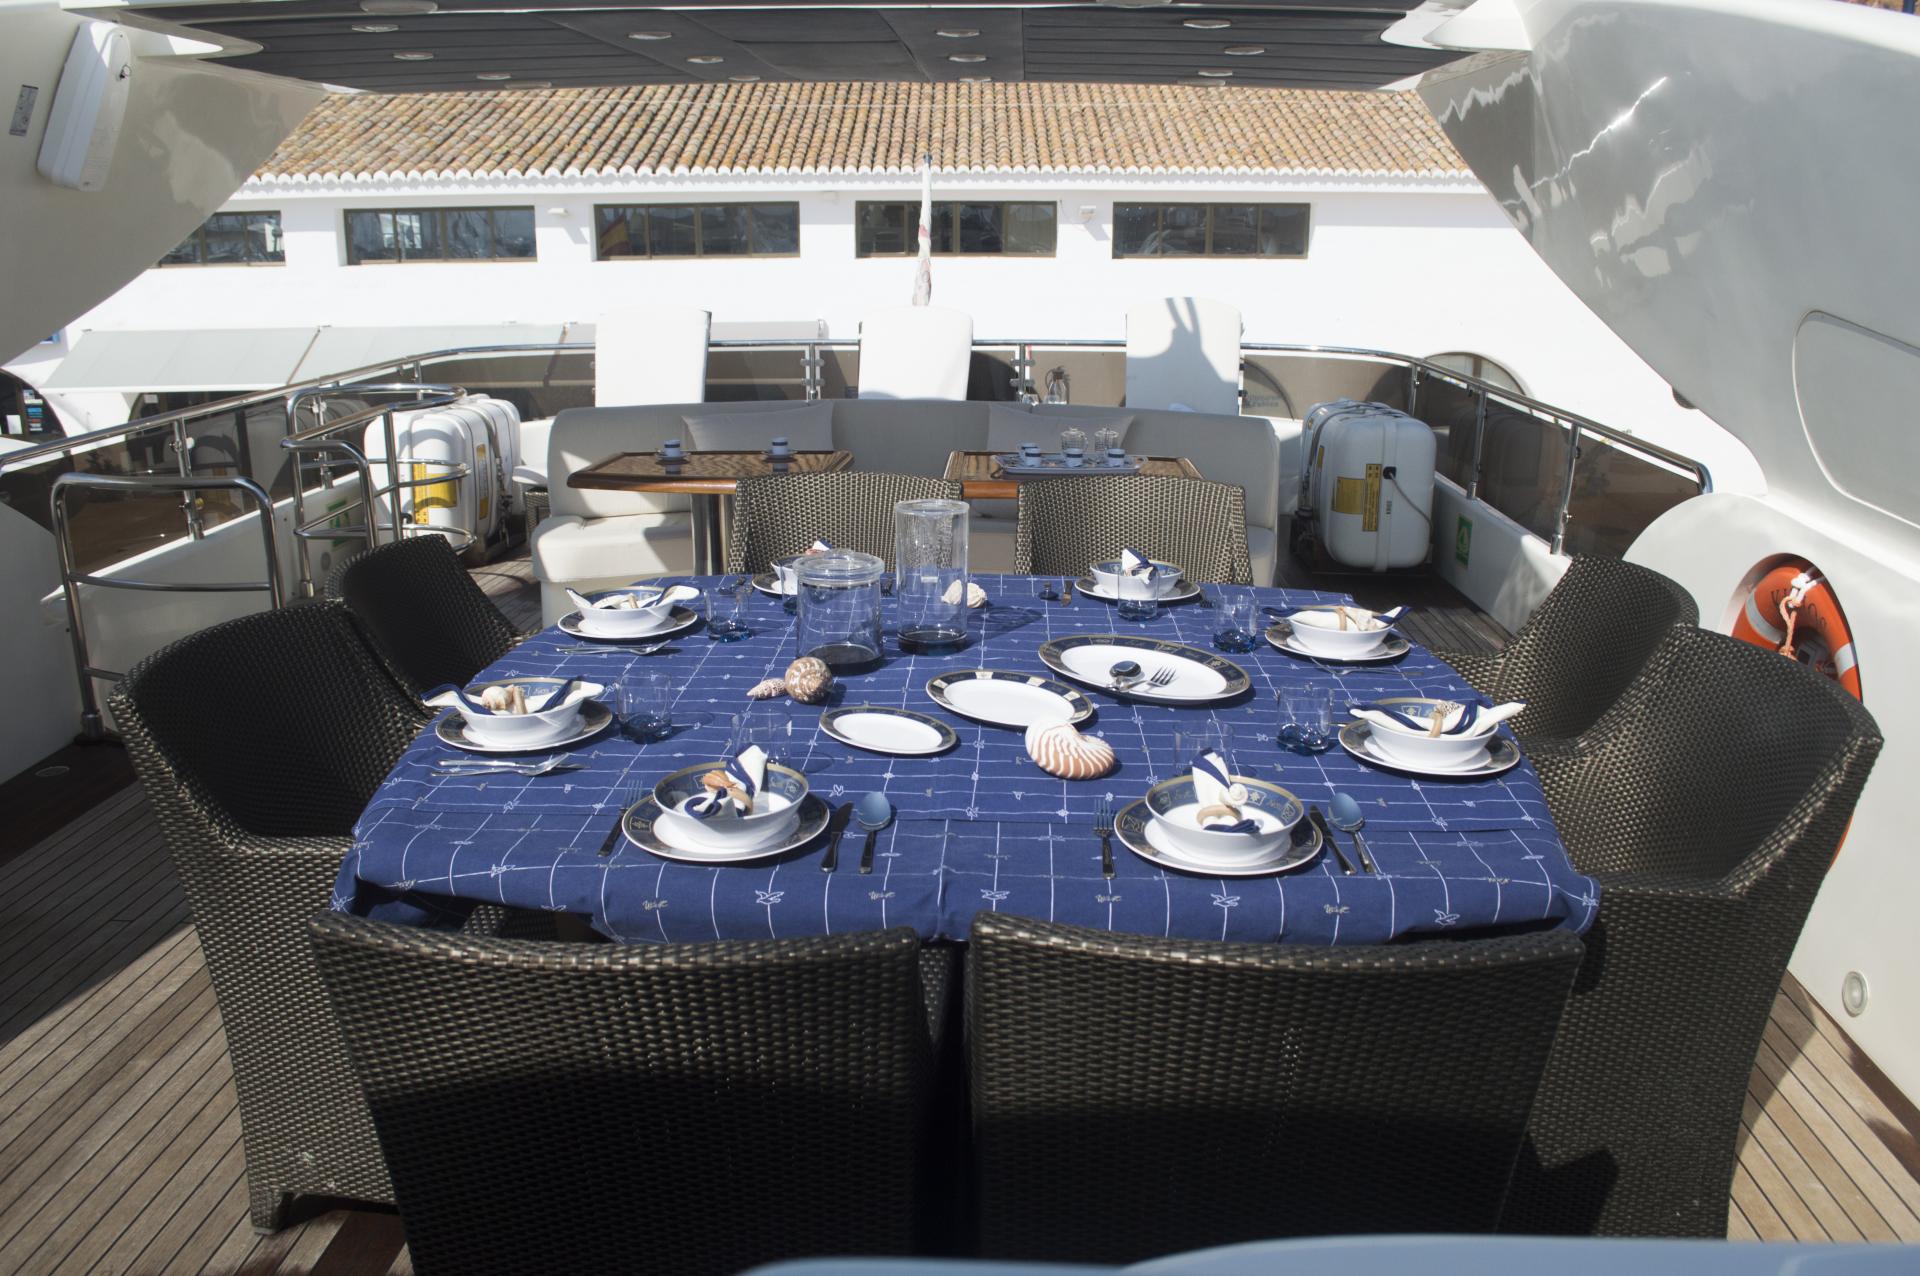 Kirios-astondoa102-charter-sun-deck-dining